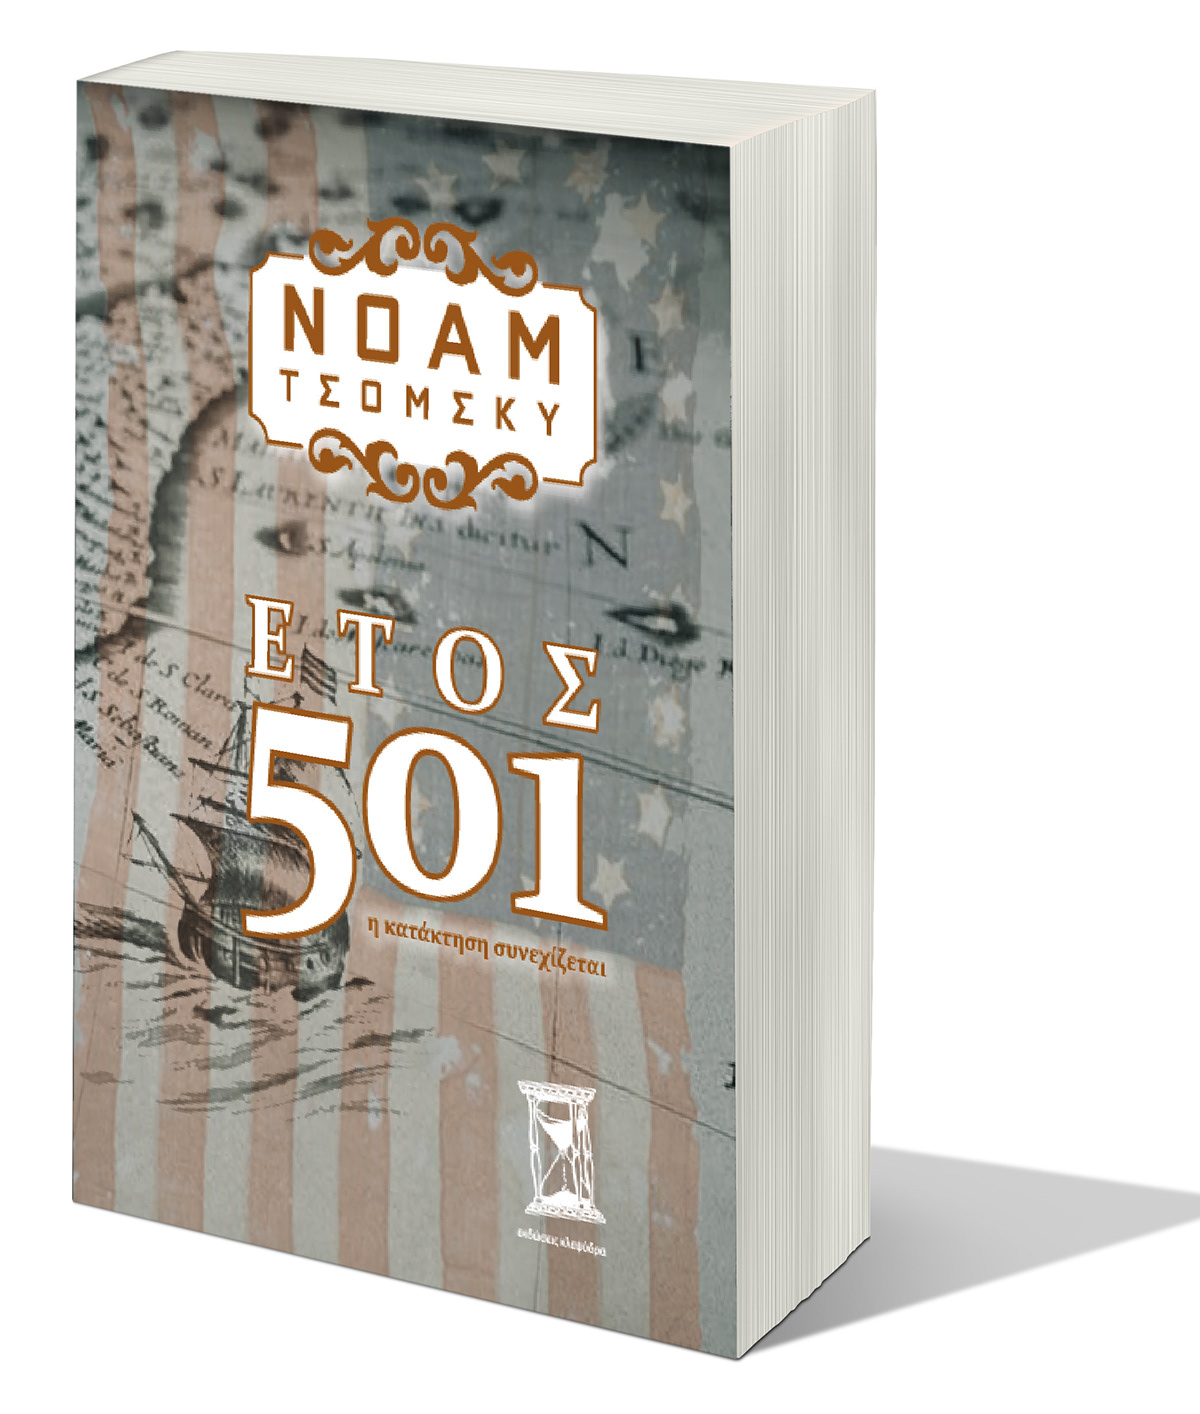 Re-design book cover for Noam Tsomski